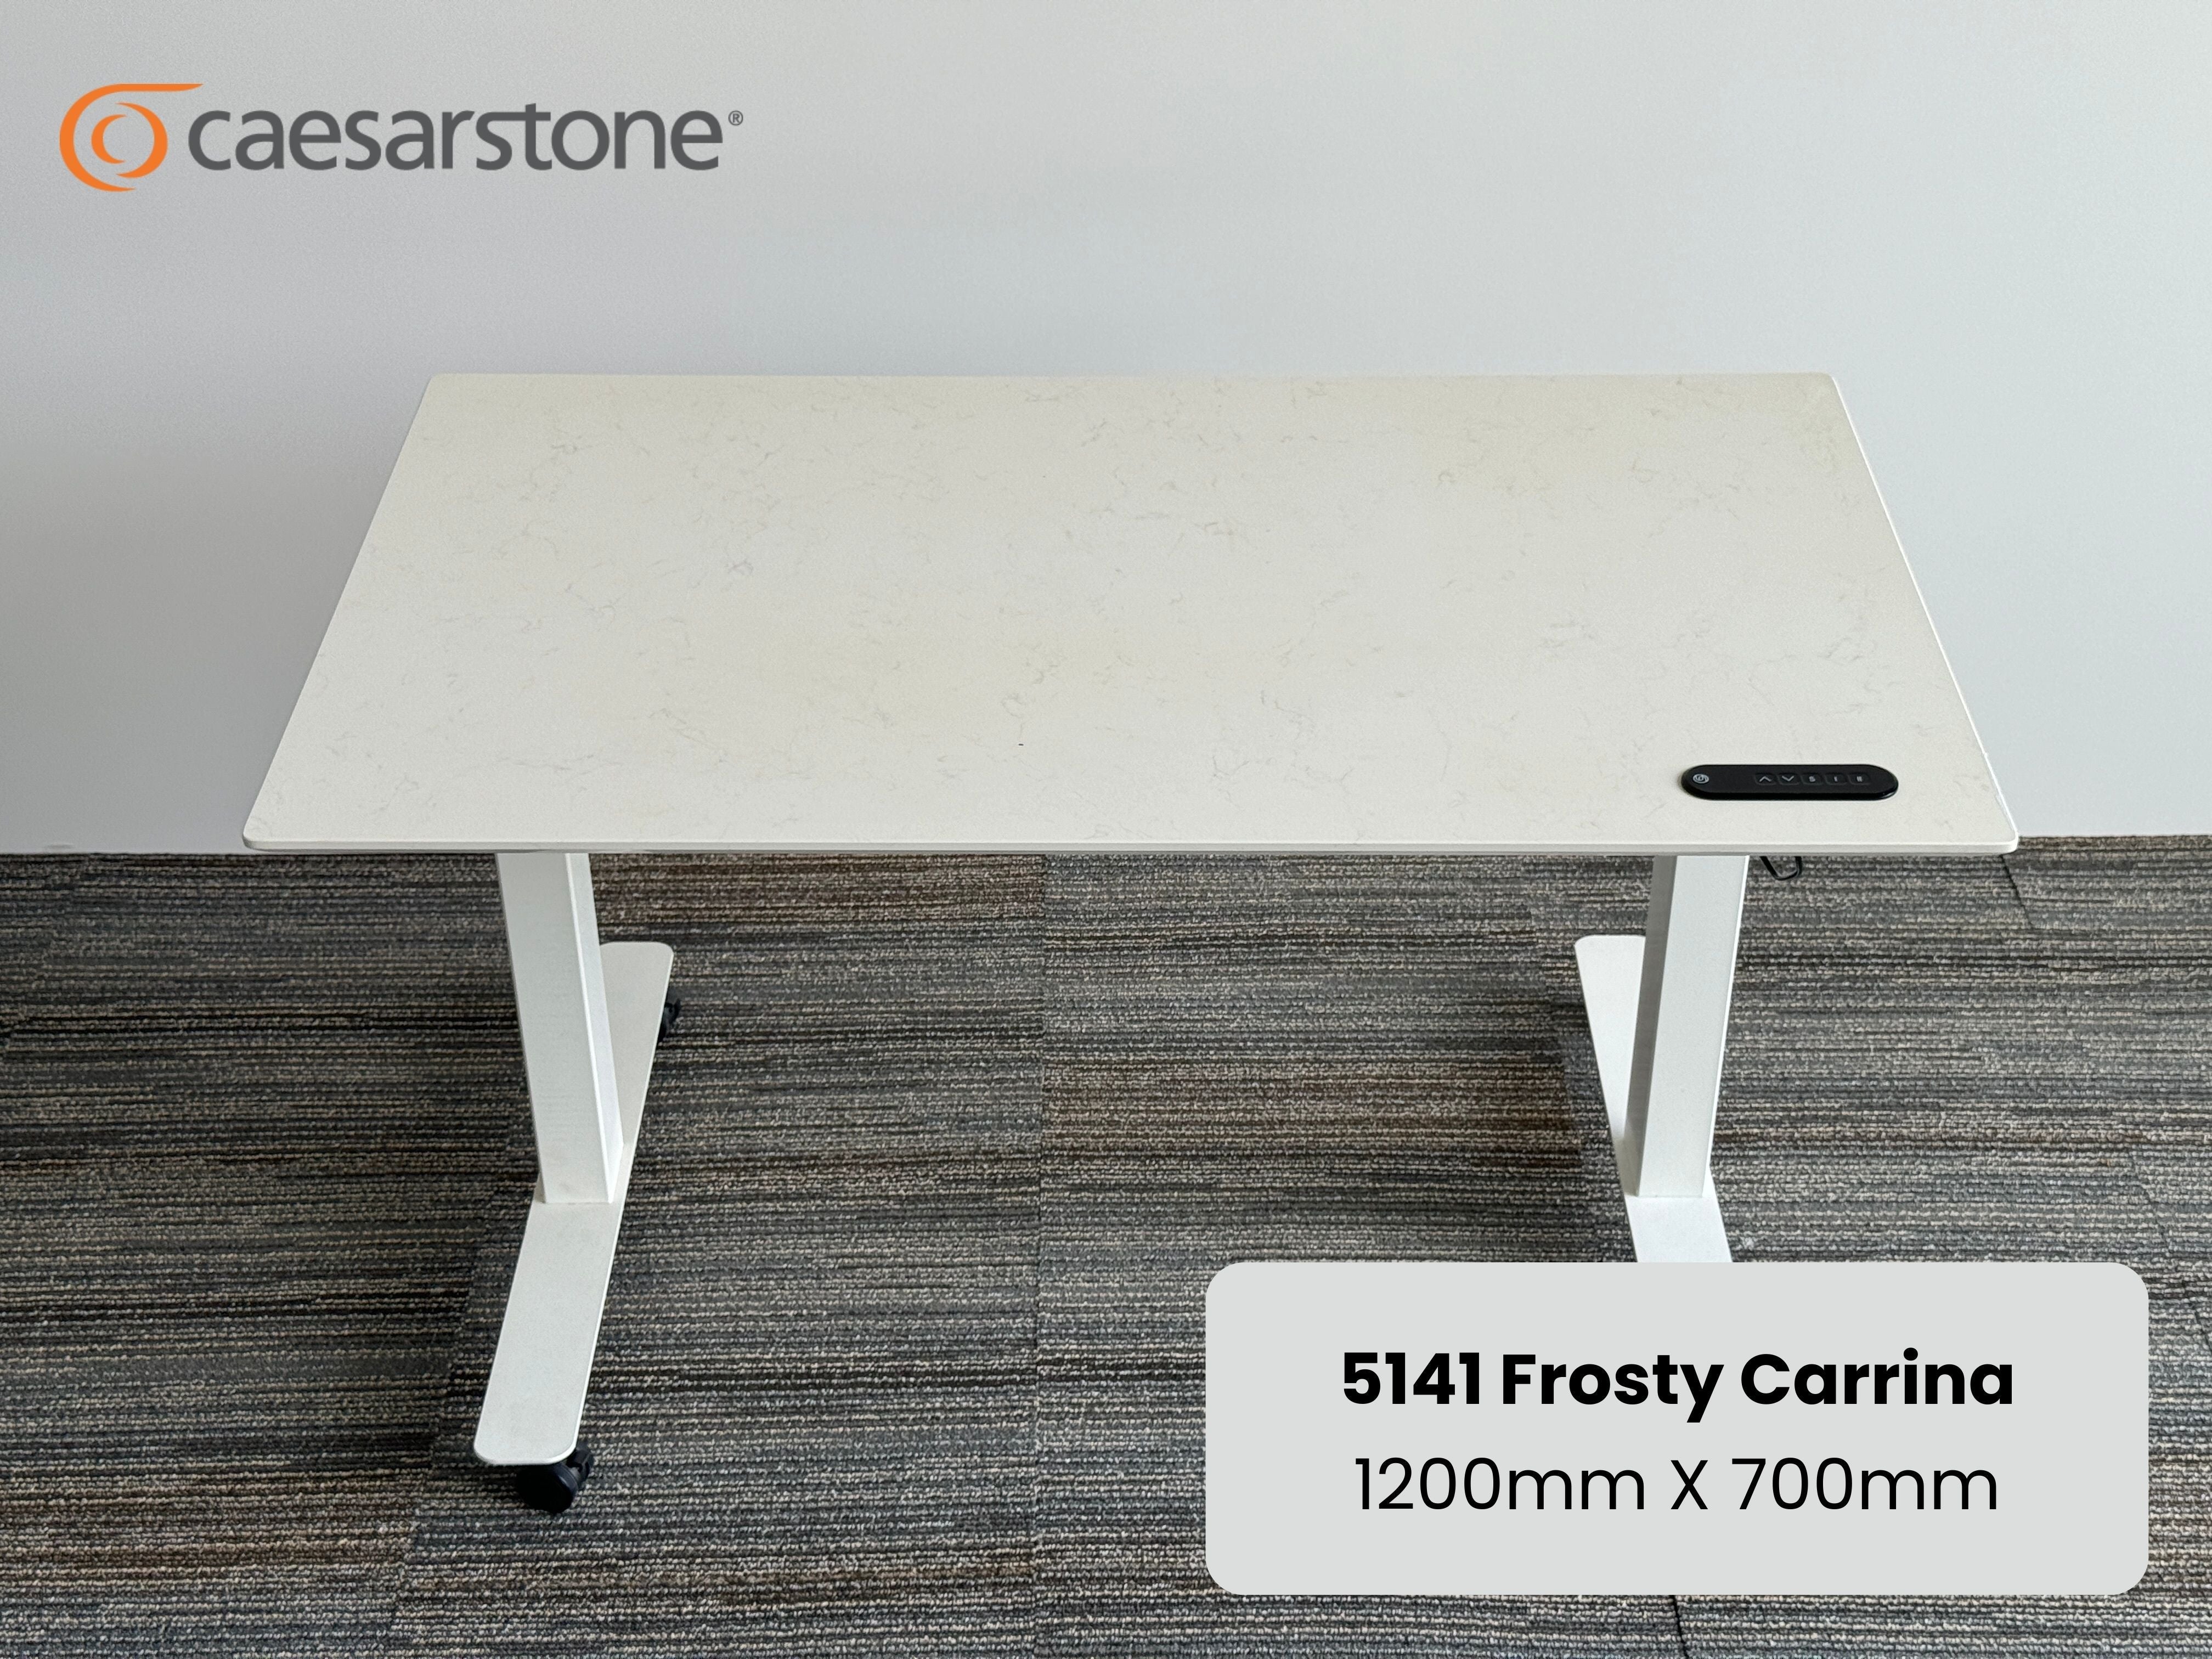 Frosty Carrina Caesarstone Standing Desk